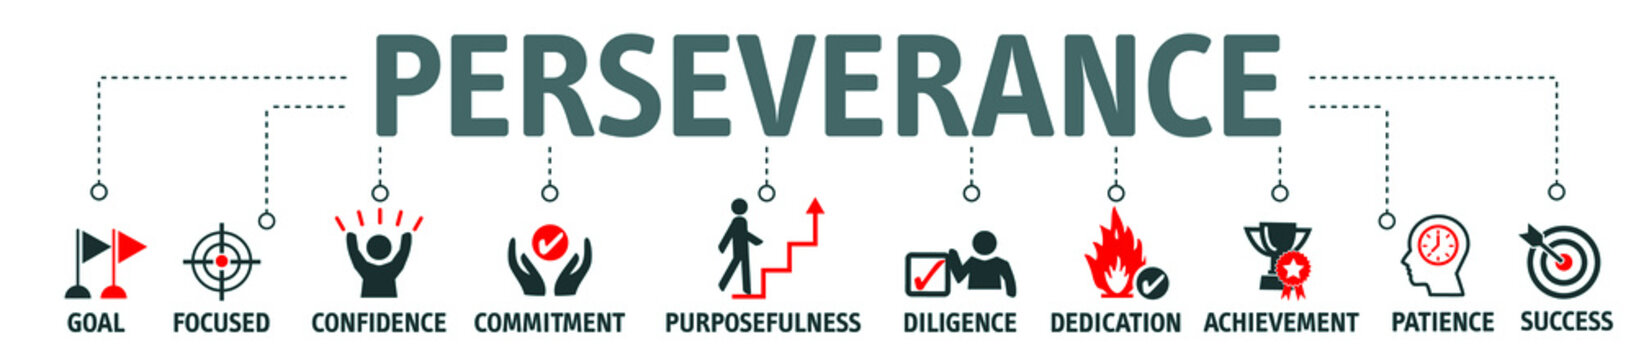 Banner perseverance vector illustration concept